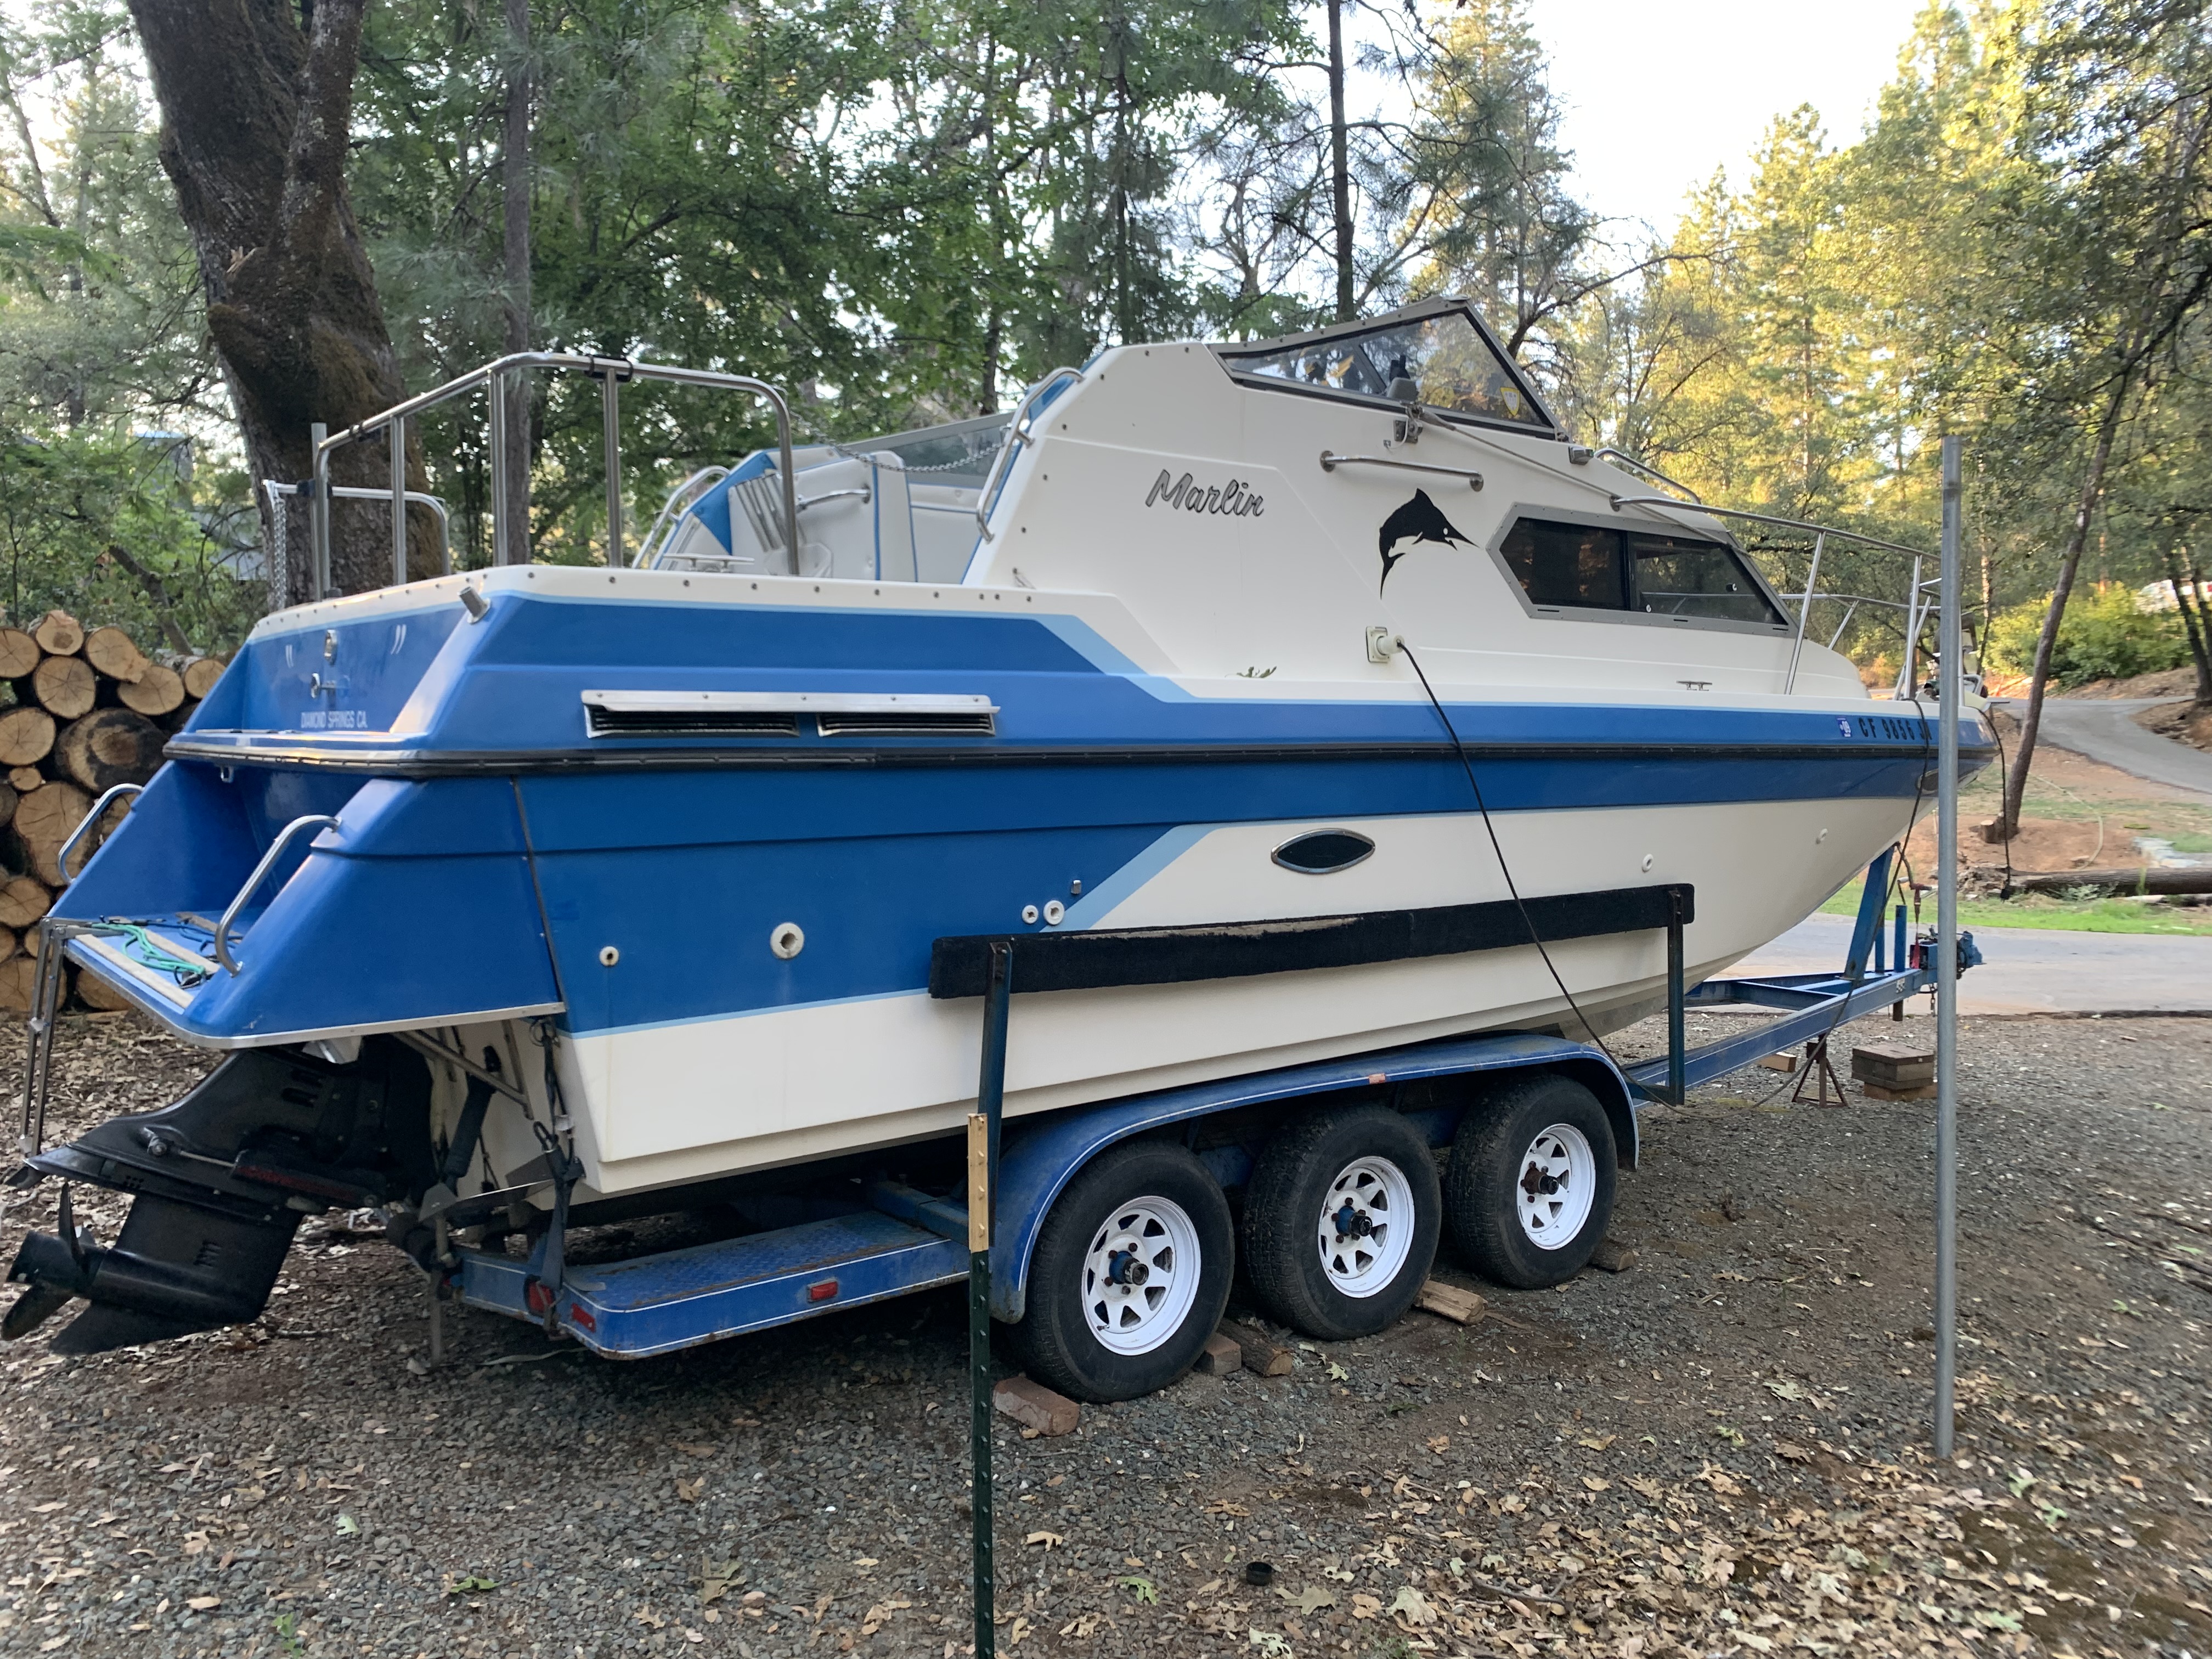 1989 Marlin Raven 265 Power boat for sale in Applegate, CA - image 6 